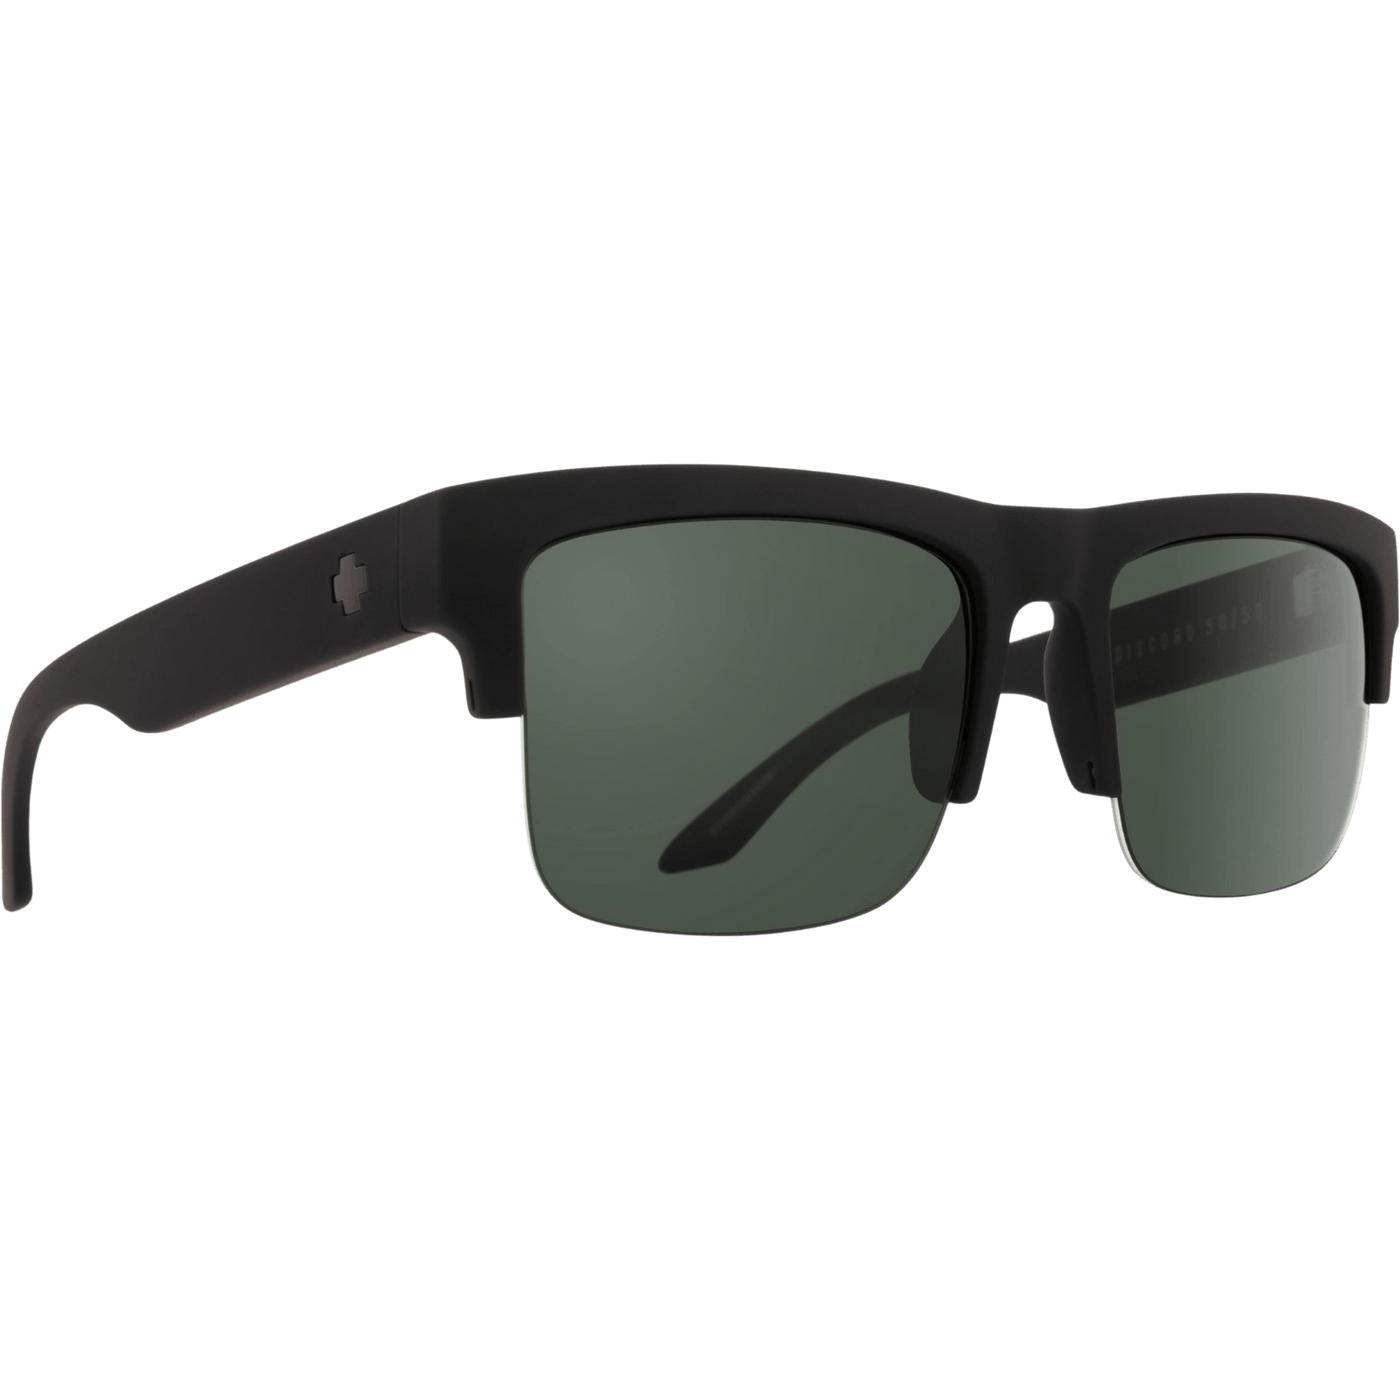 SPY DISCORD 5050 Polarized Sunglasses - Gray/Green 8Lines Shop - Fast Shipping